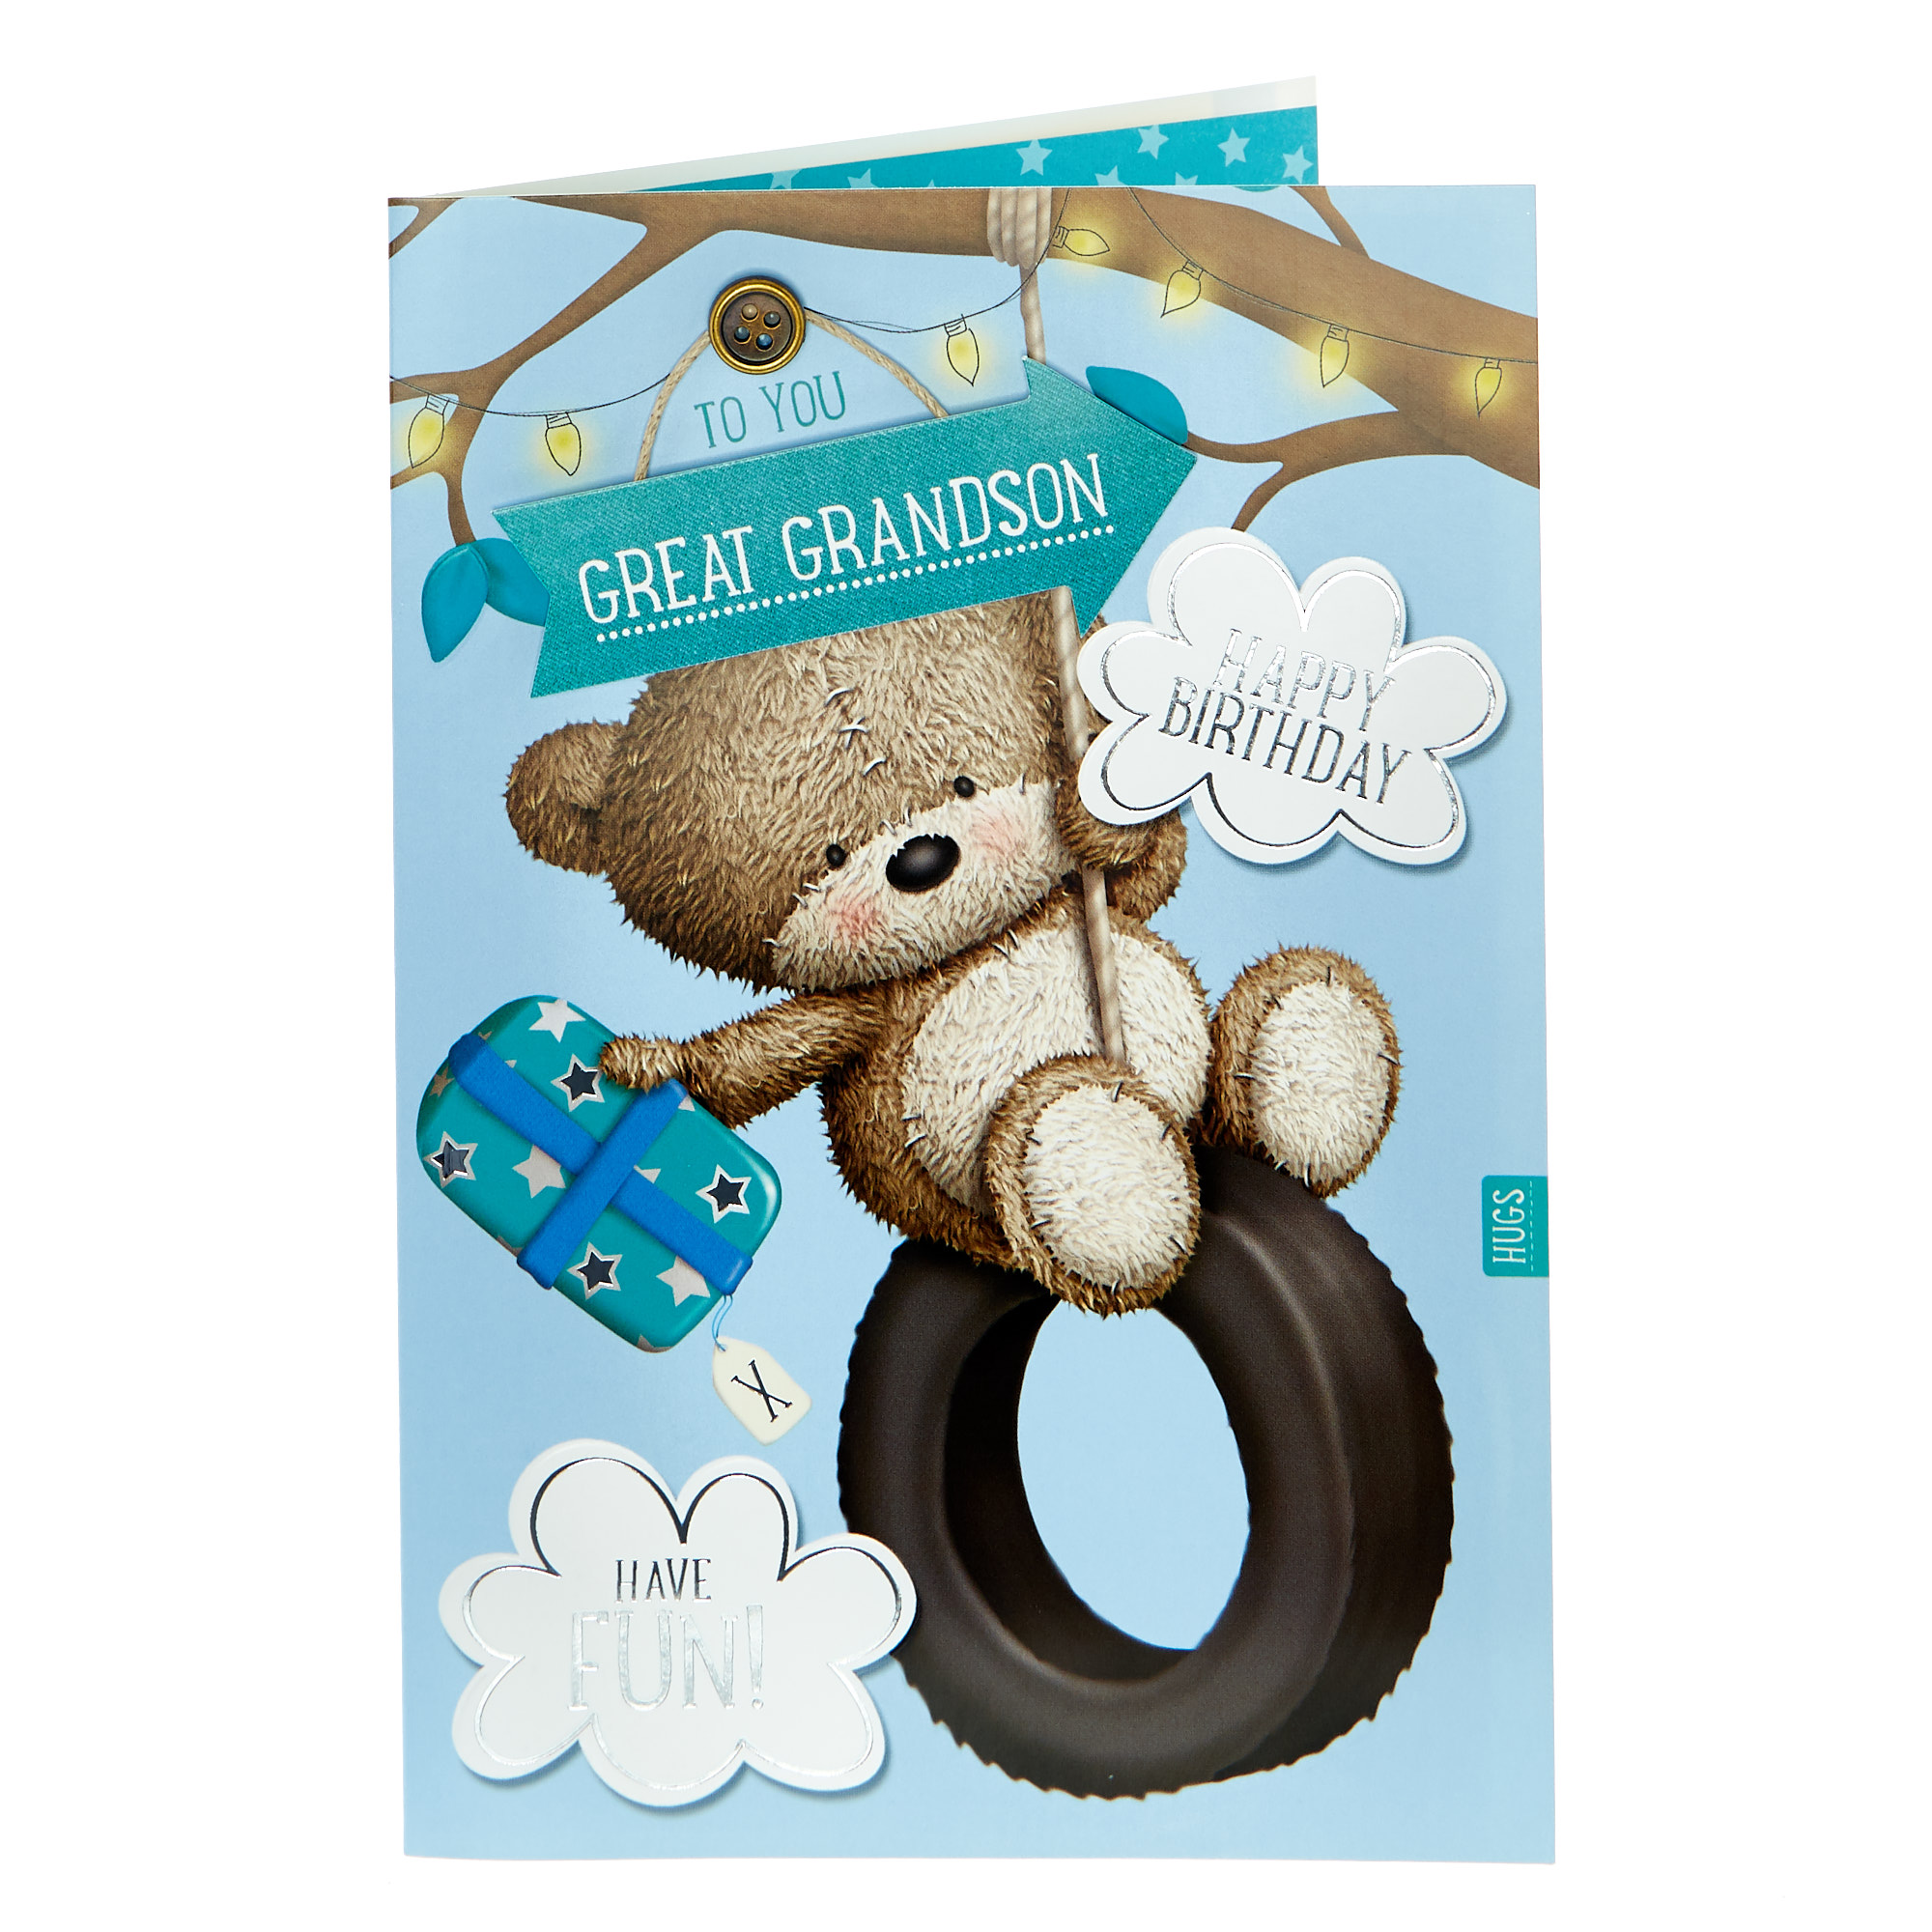 Hugs Bear Birthday Card - Great Grandson Have Fun